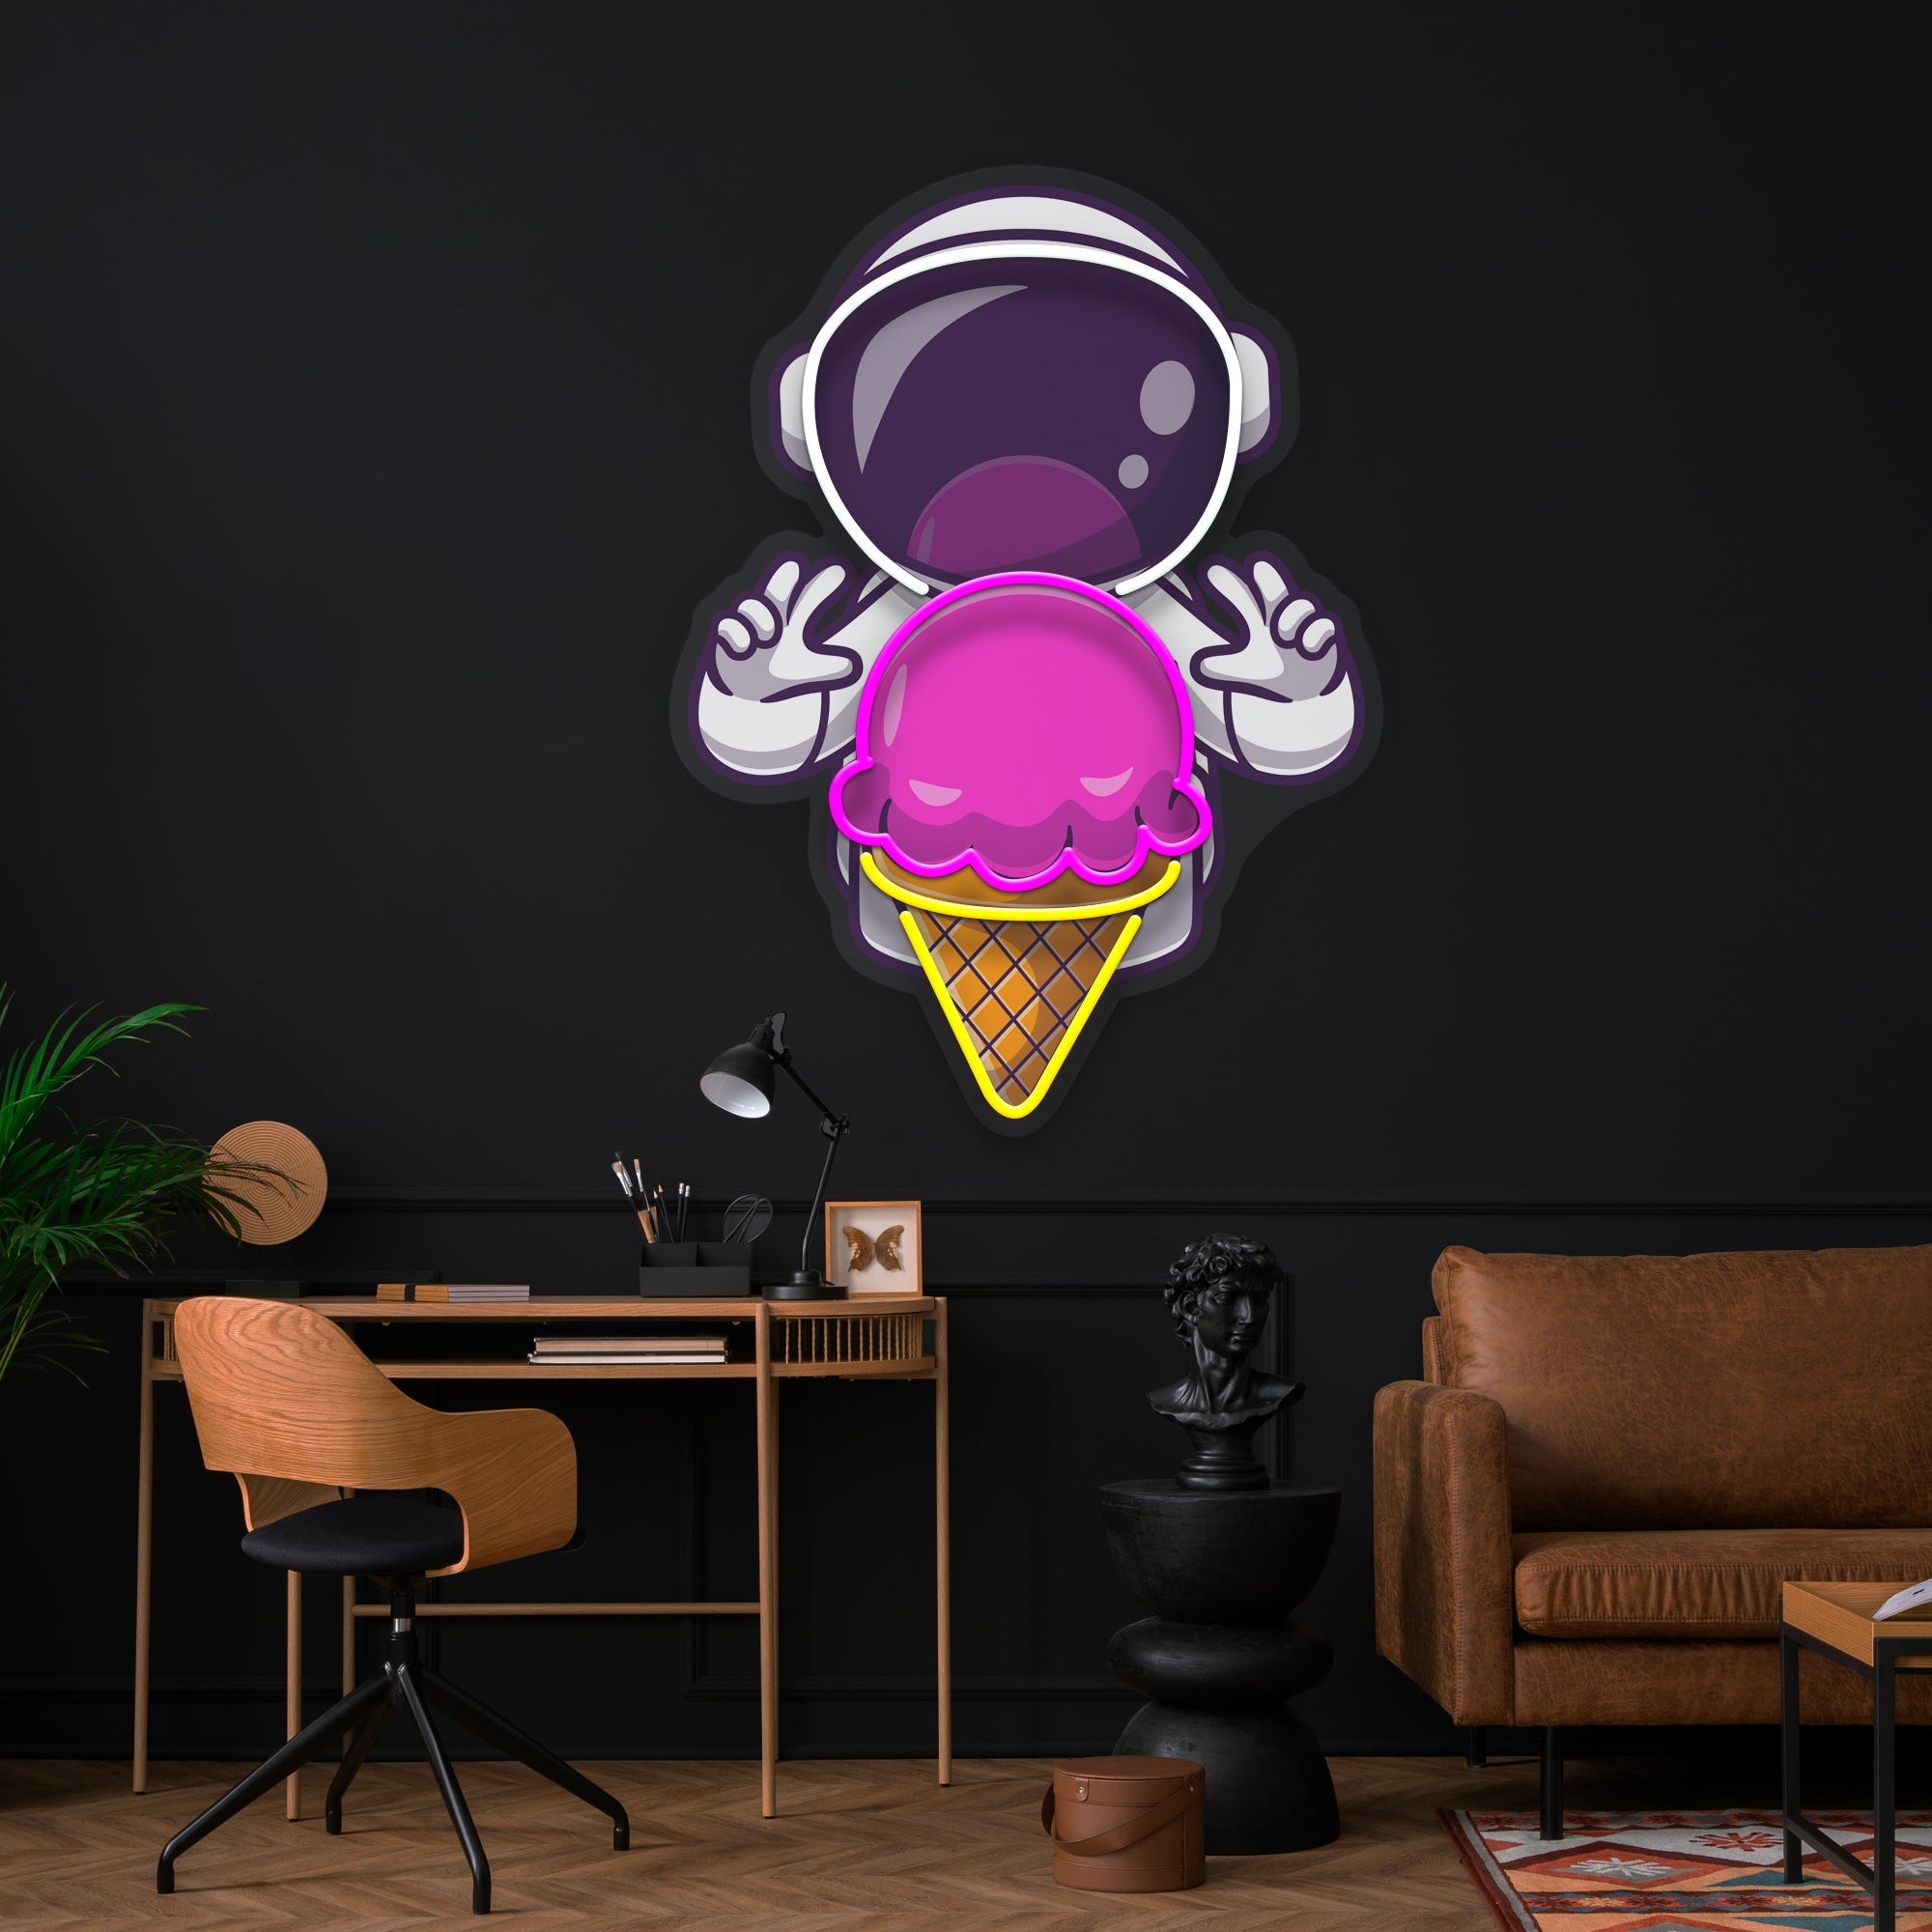 Astronaut Ice Cream Art work Led Neon Sign Light - Neonbir